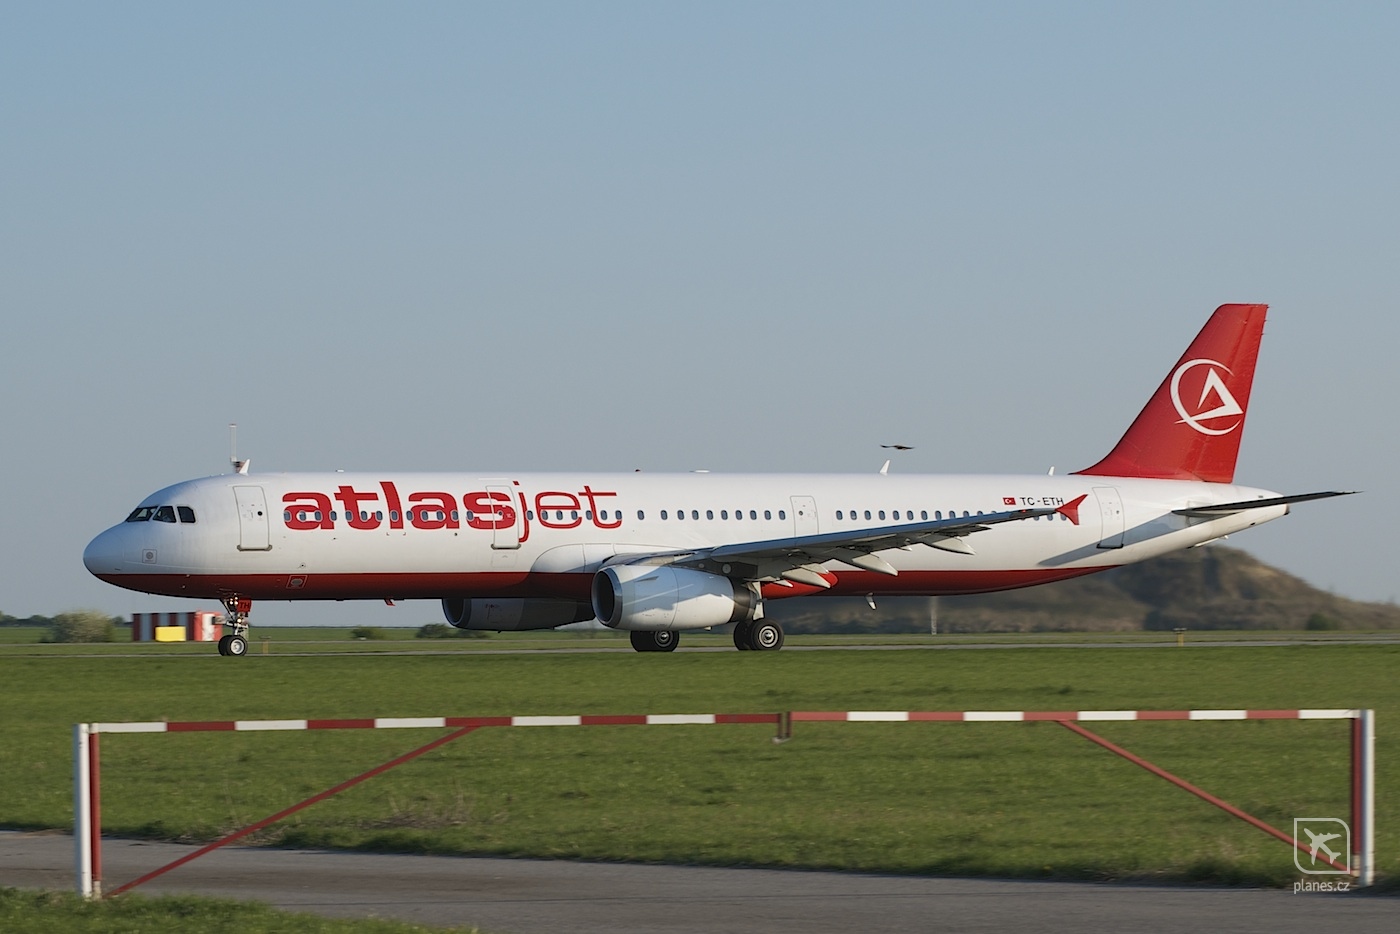 Atlasjet Airlines